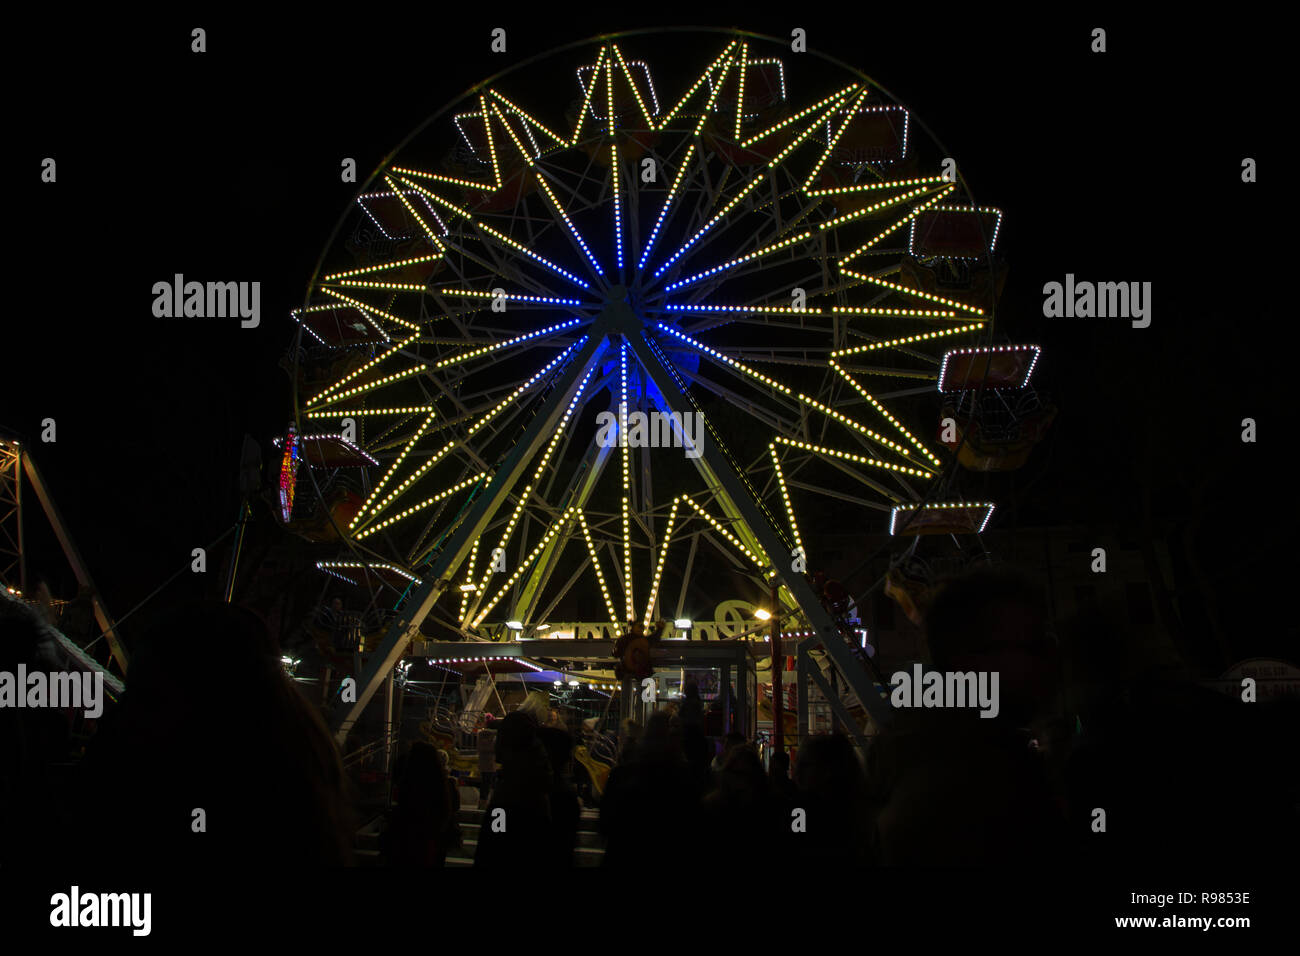 Gorizia, Italy - December 02, 2018: Annual traditional Christmas fair in center of Gorizia city, Italy. Ferris wheel on the background. Stock Photo